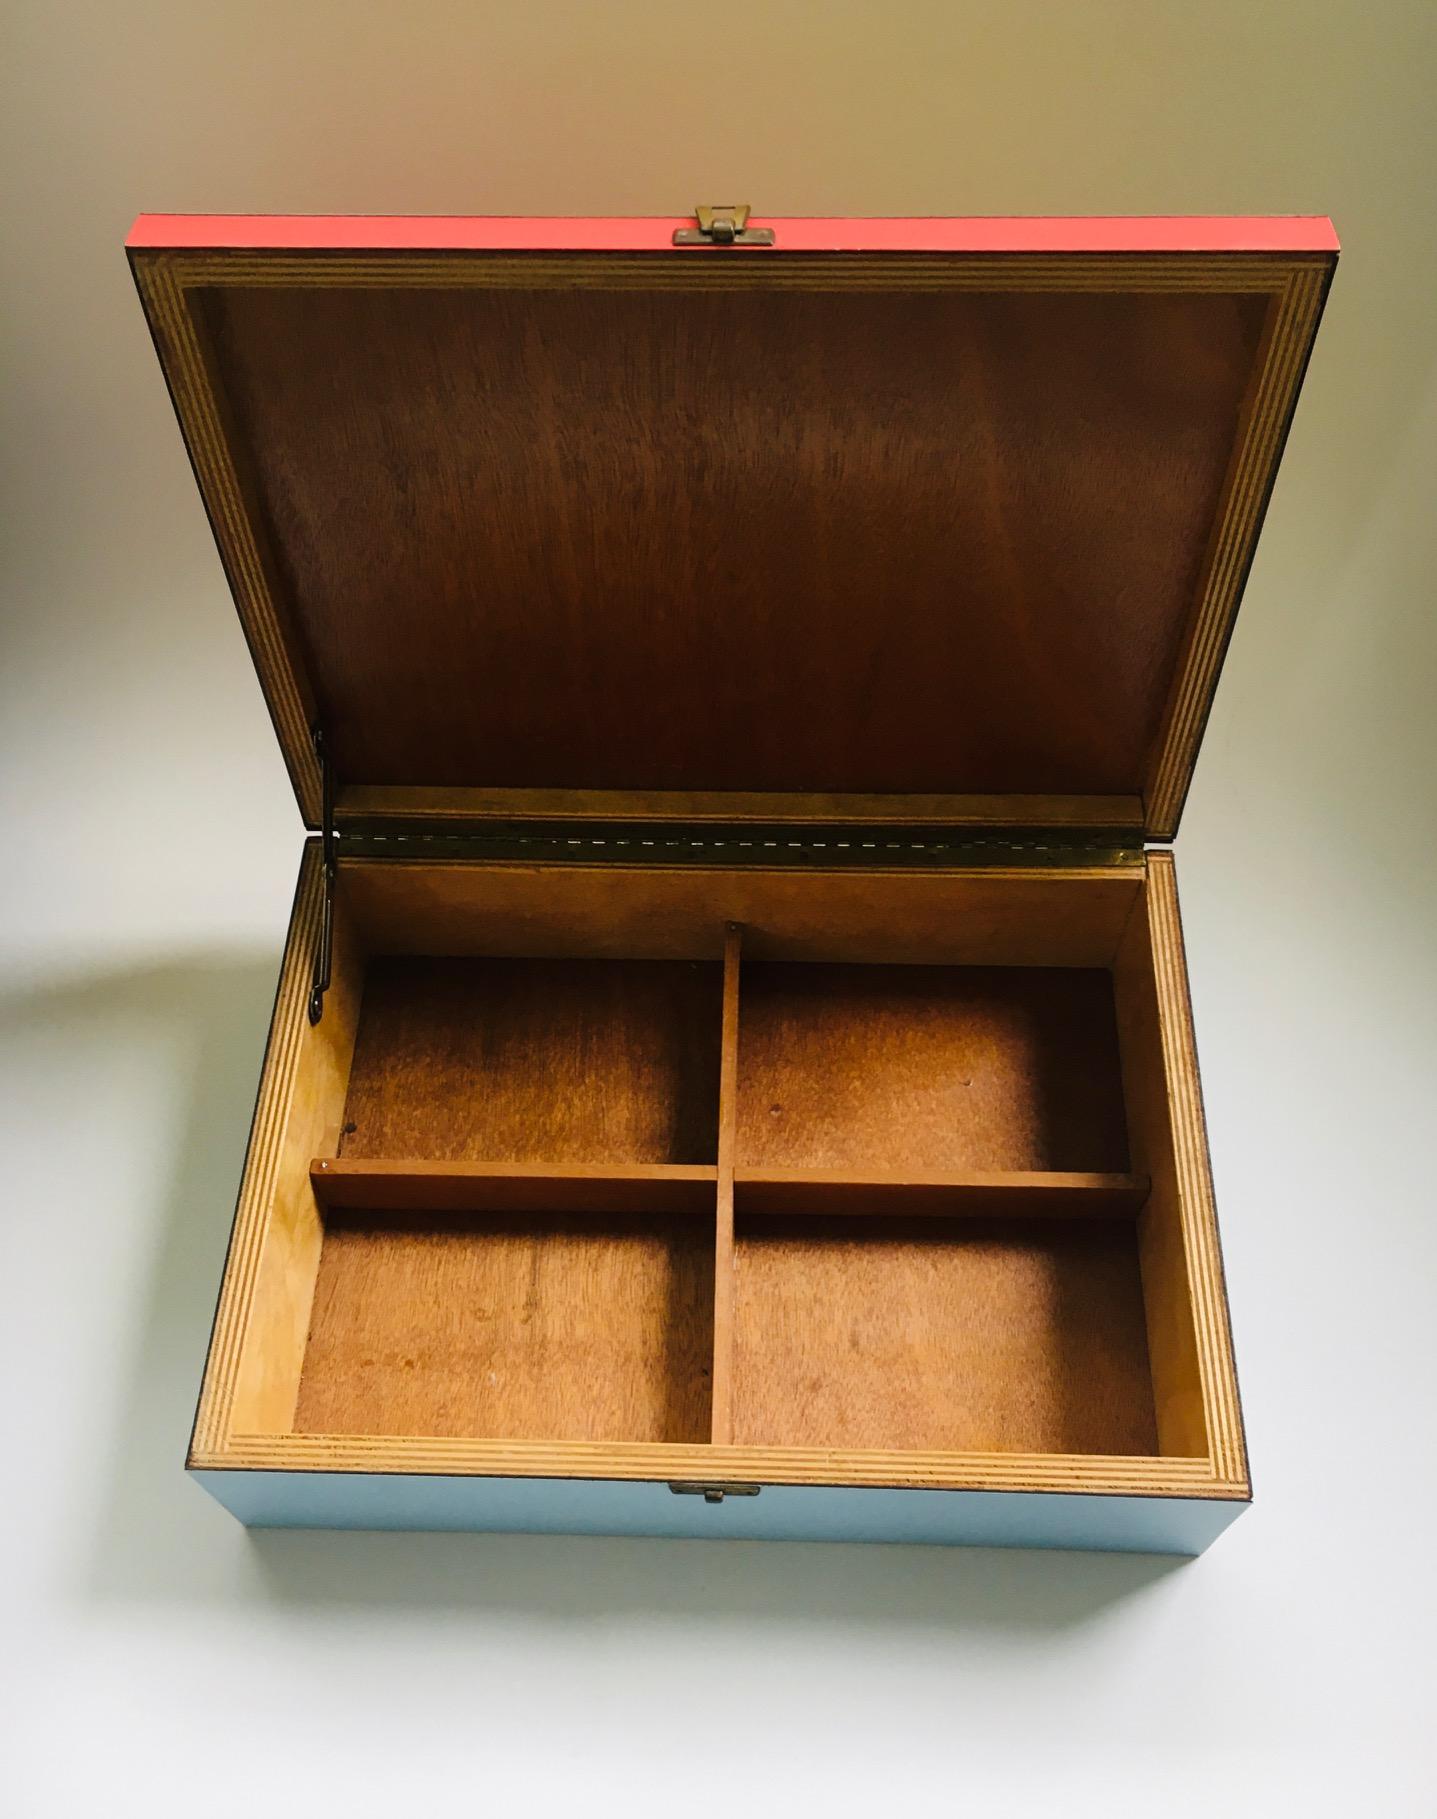 Midcentury Modern Dutch Design STIJL Modernism Letter Box, 1950's Holland For Sale 2